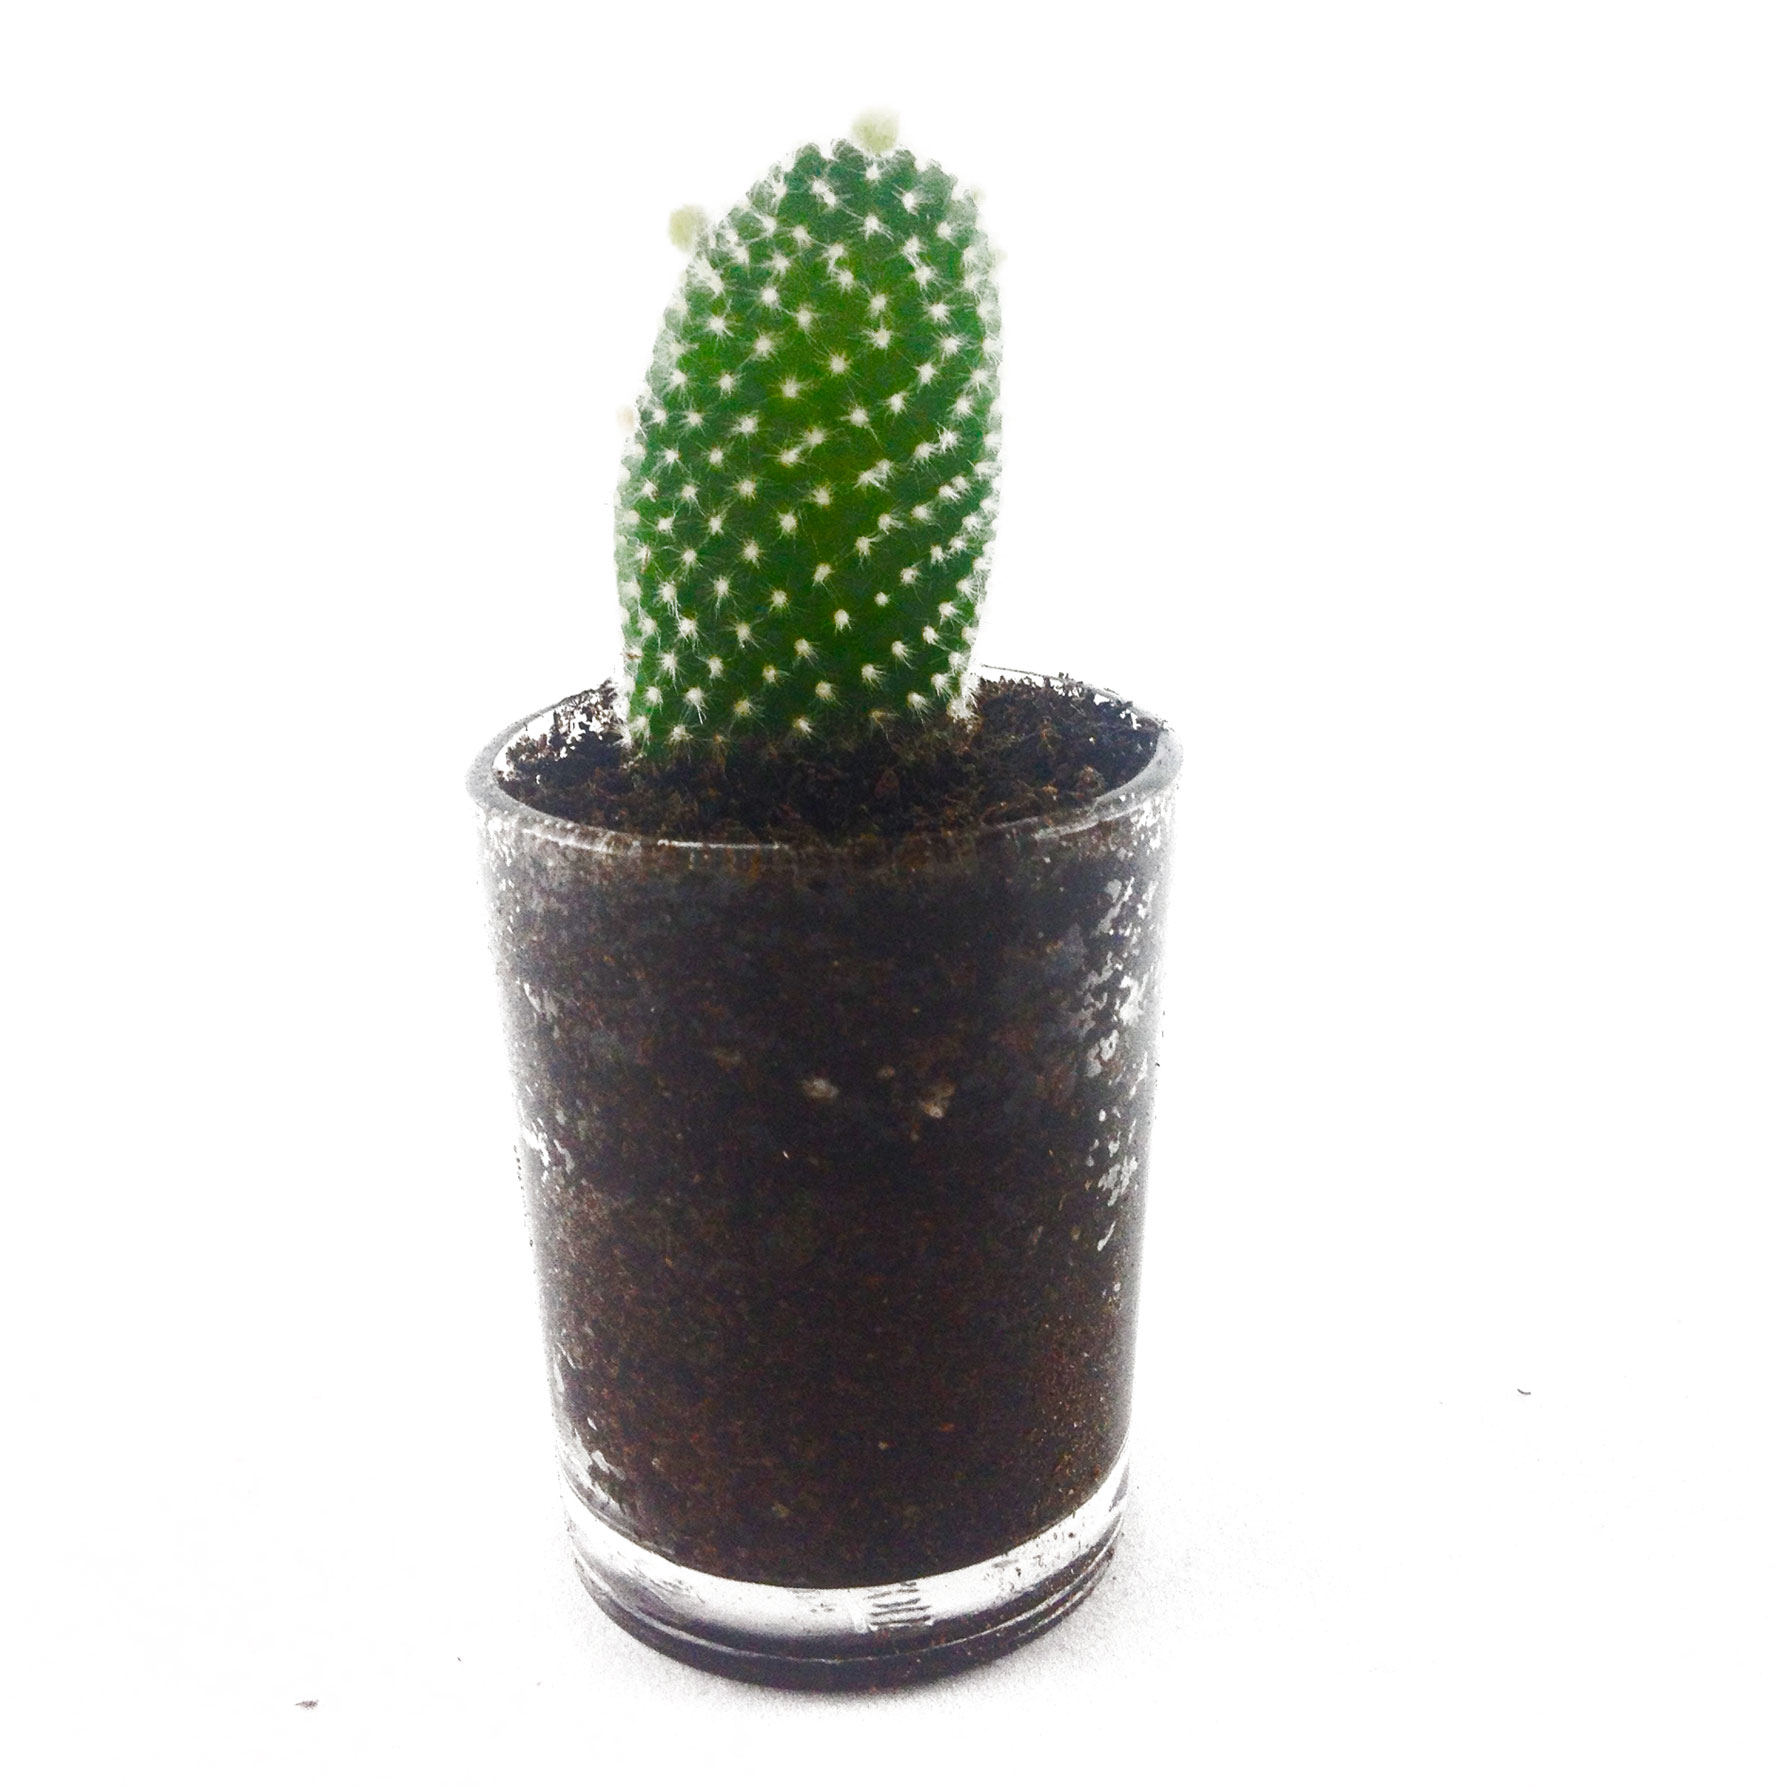 Home cactus photo